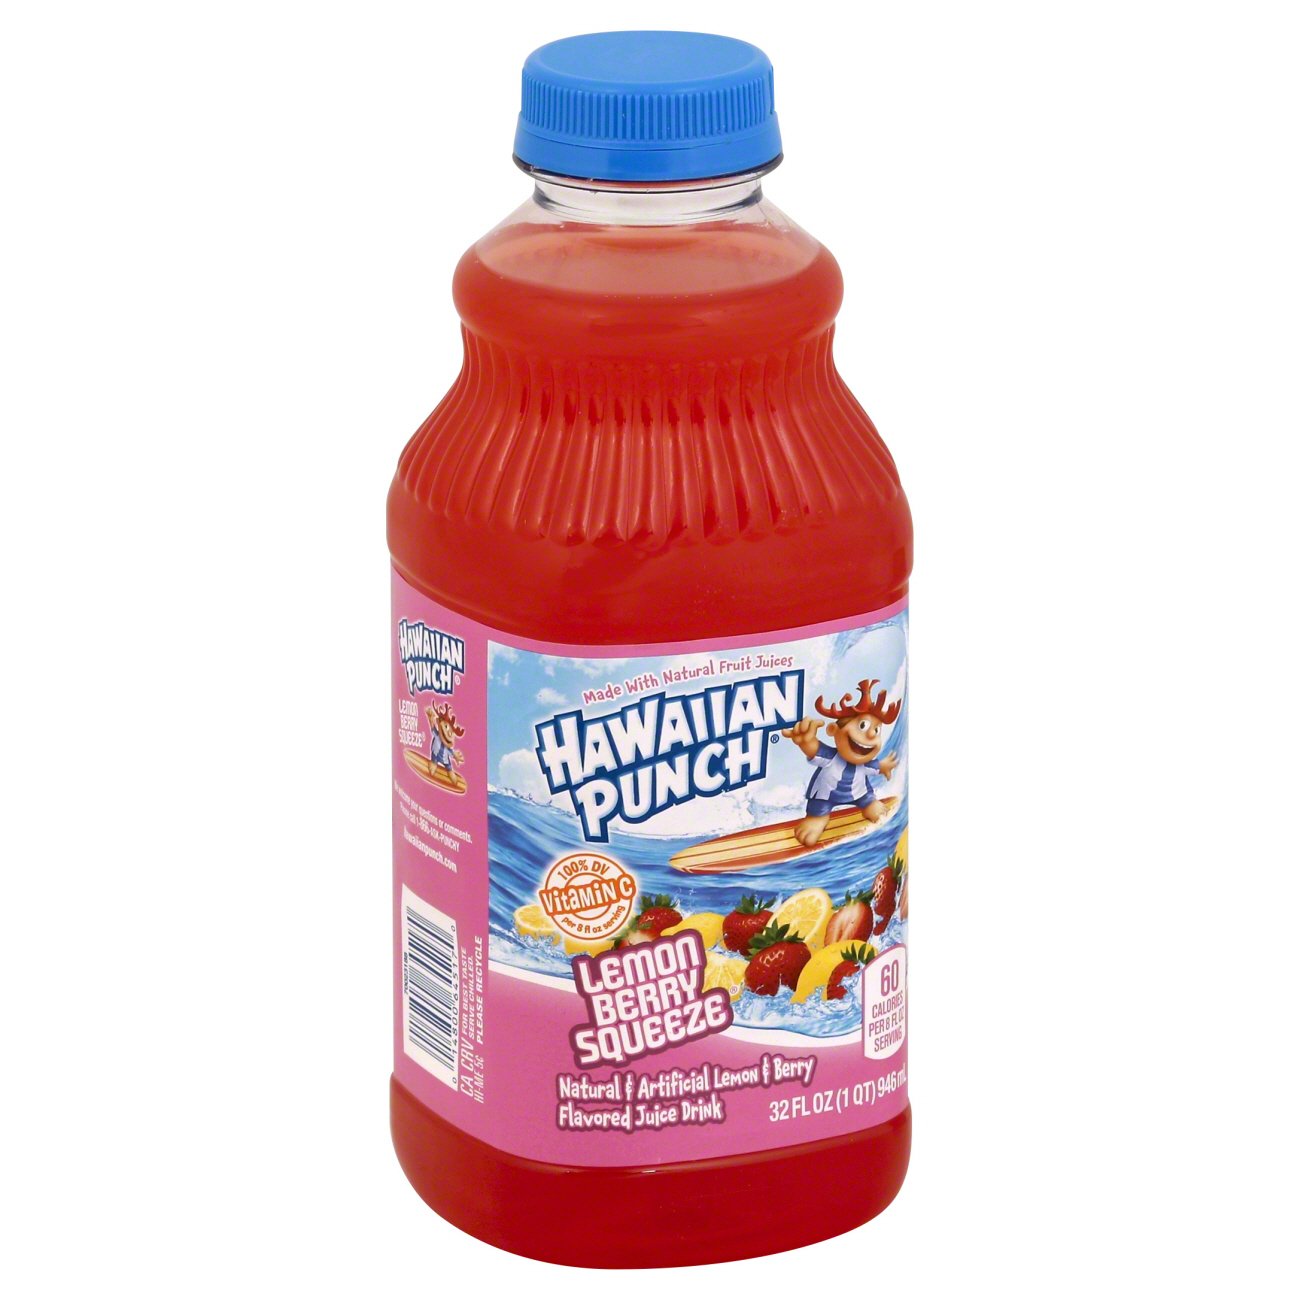 Hawaiian Punch Lemon Berry Squeeze Juice Drink - Shop Juice at H-E-B